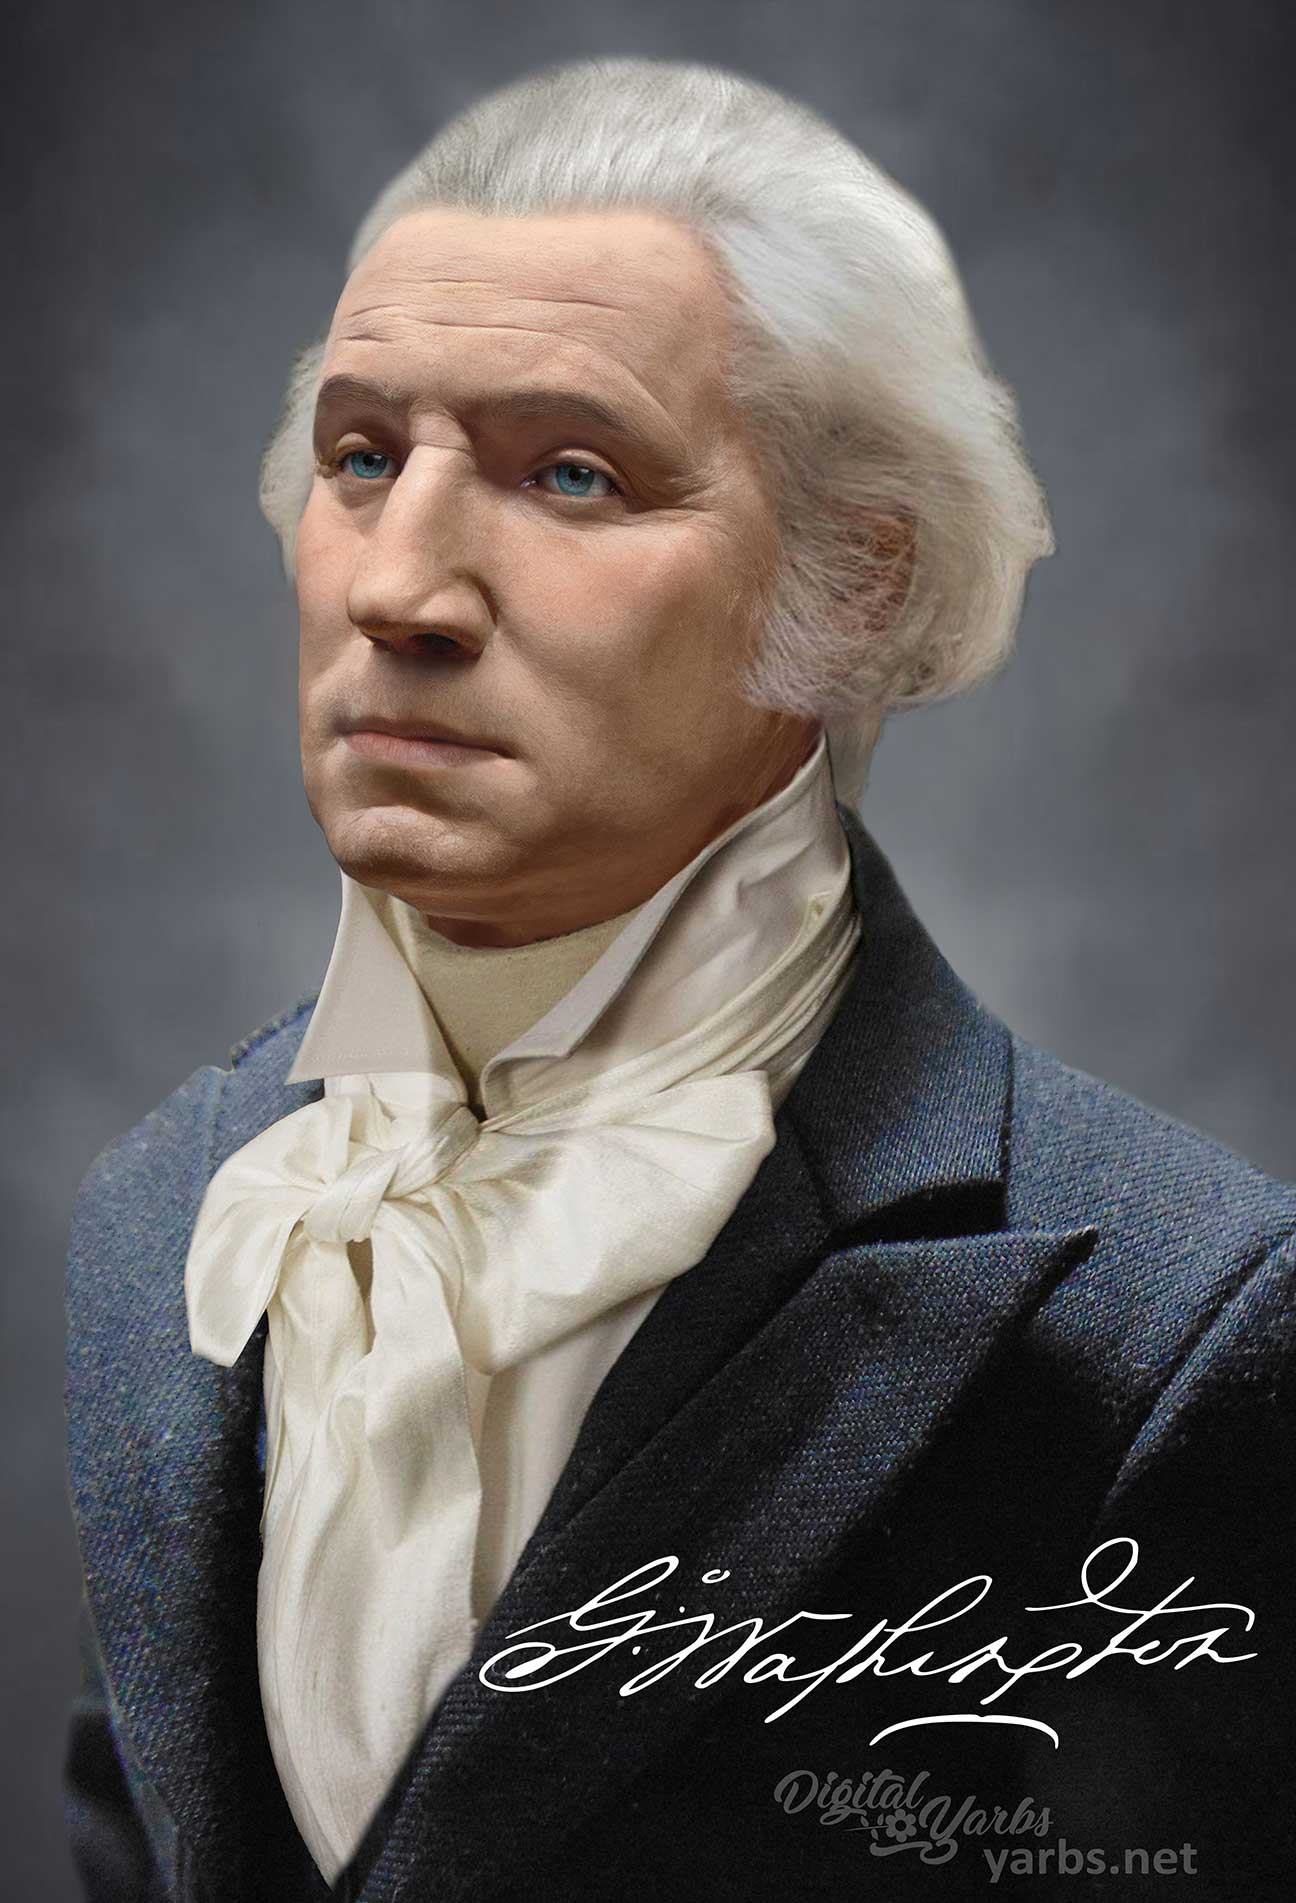 Real Face of George Washington life mask reconstruction